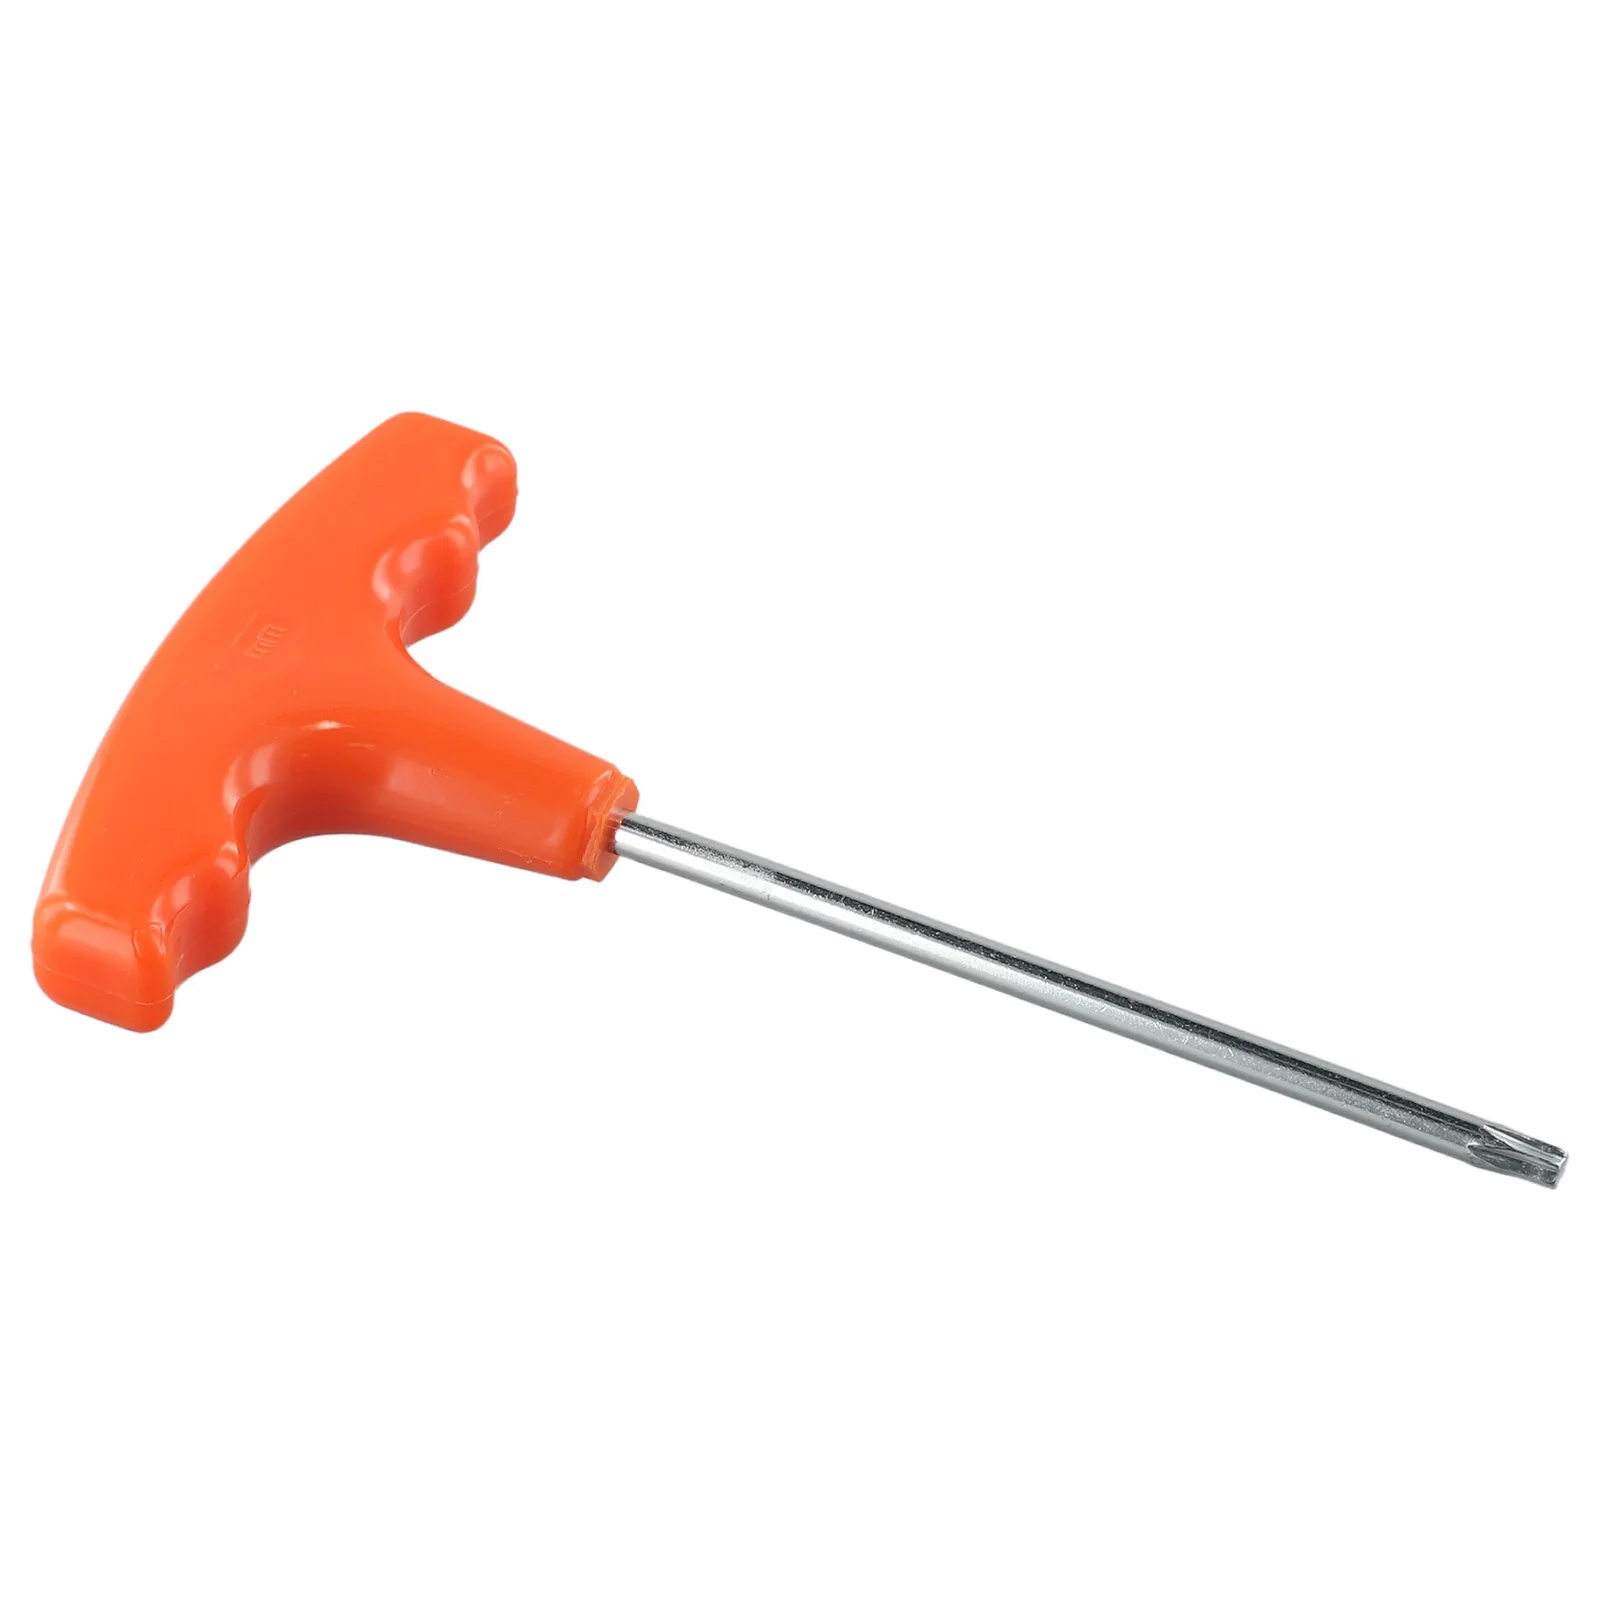 

T Handle Screwdriver Driver for Stihl Makita Plastic+Steel Orange+Silver # 0812 370 1000 15cm Useful High Quality